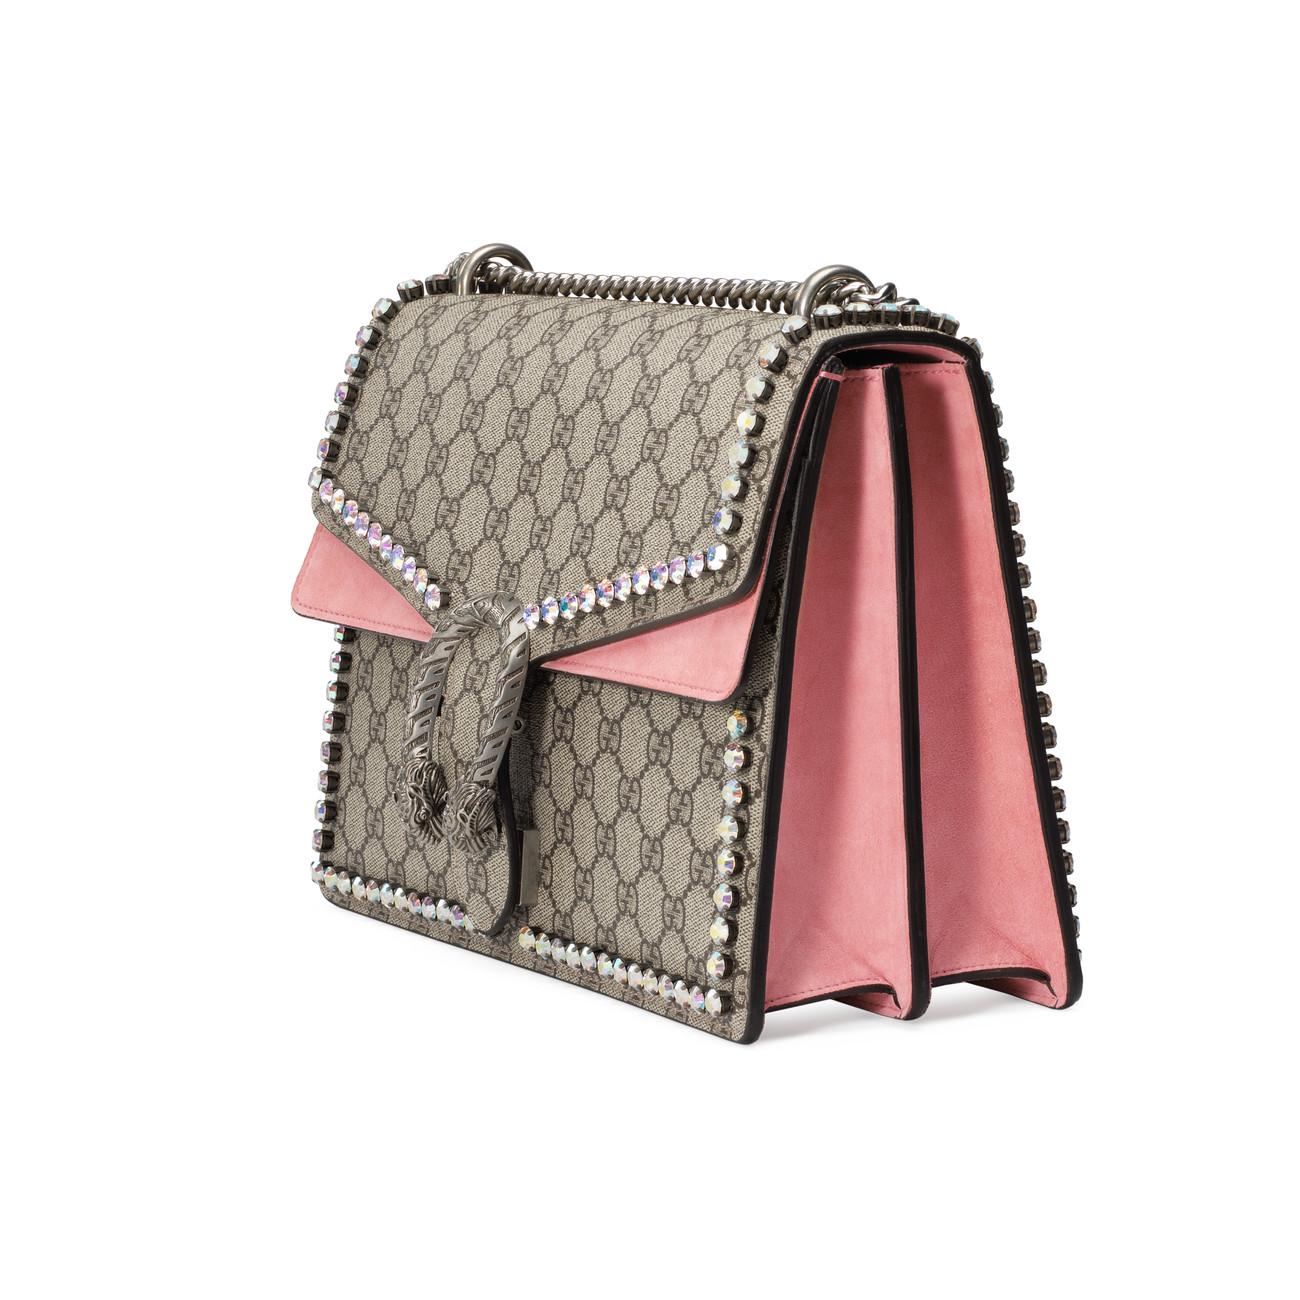 Gucci Canvas Dionysus GG Medium Crystal Shoulder Bag in Pink - Lyst